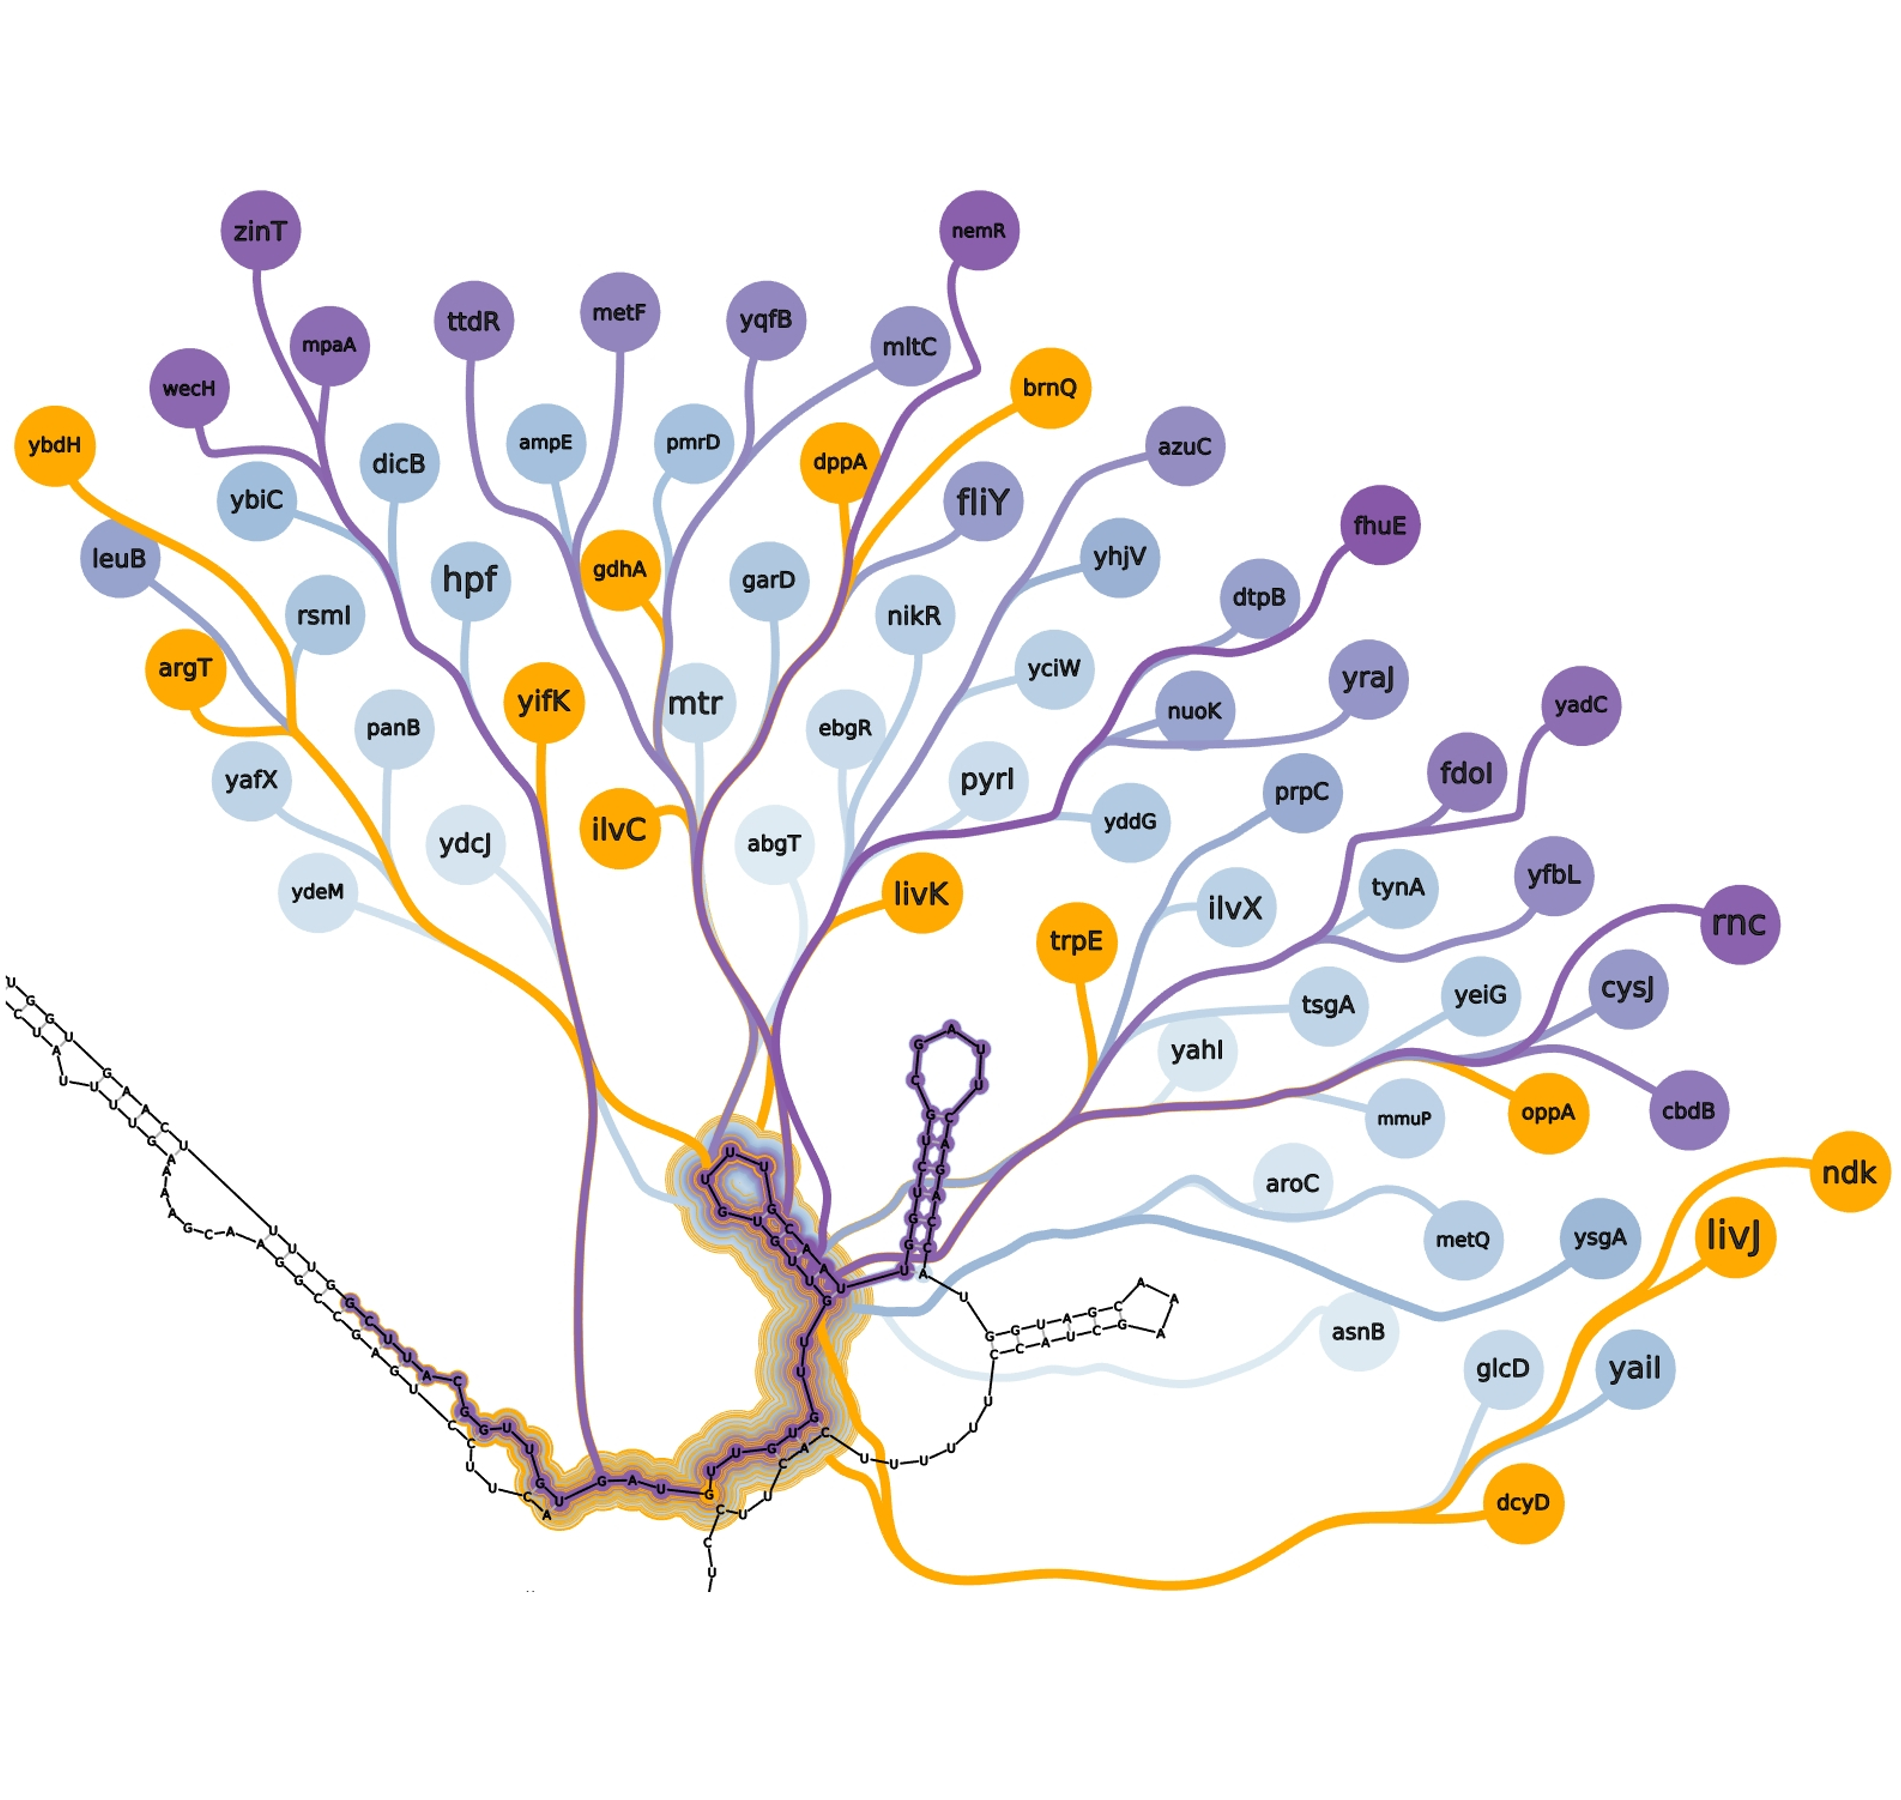 sRNA-mRNA interactions